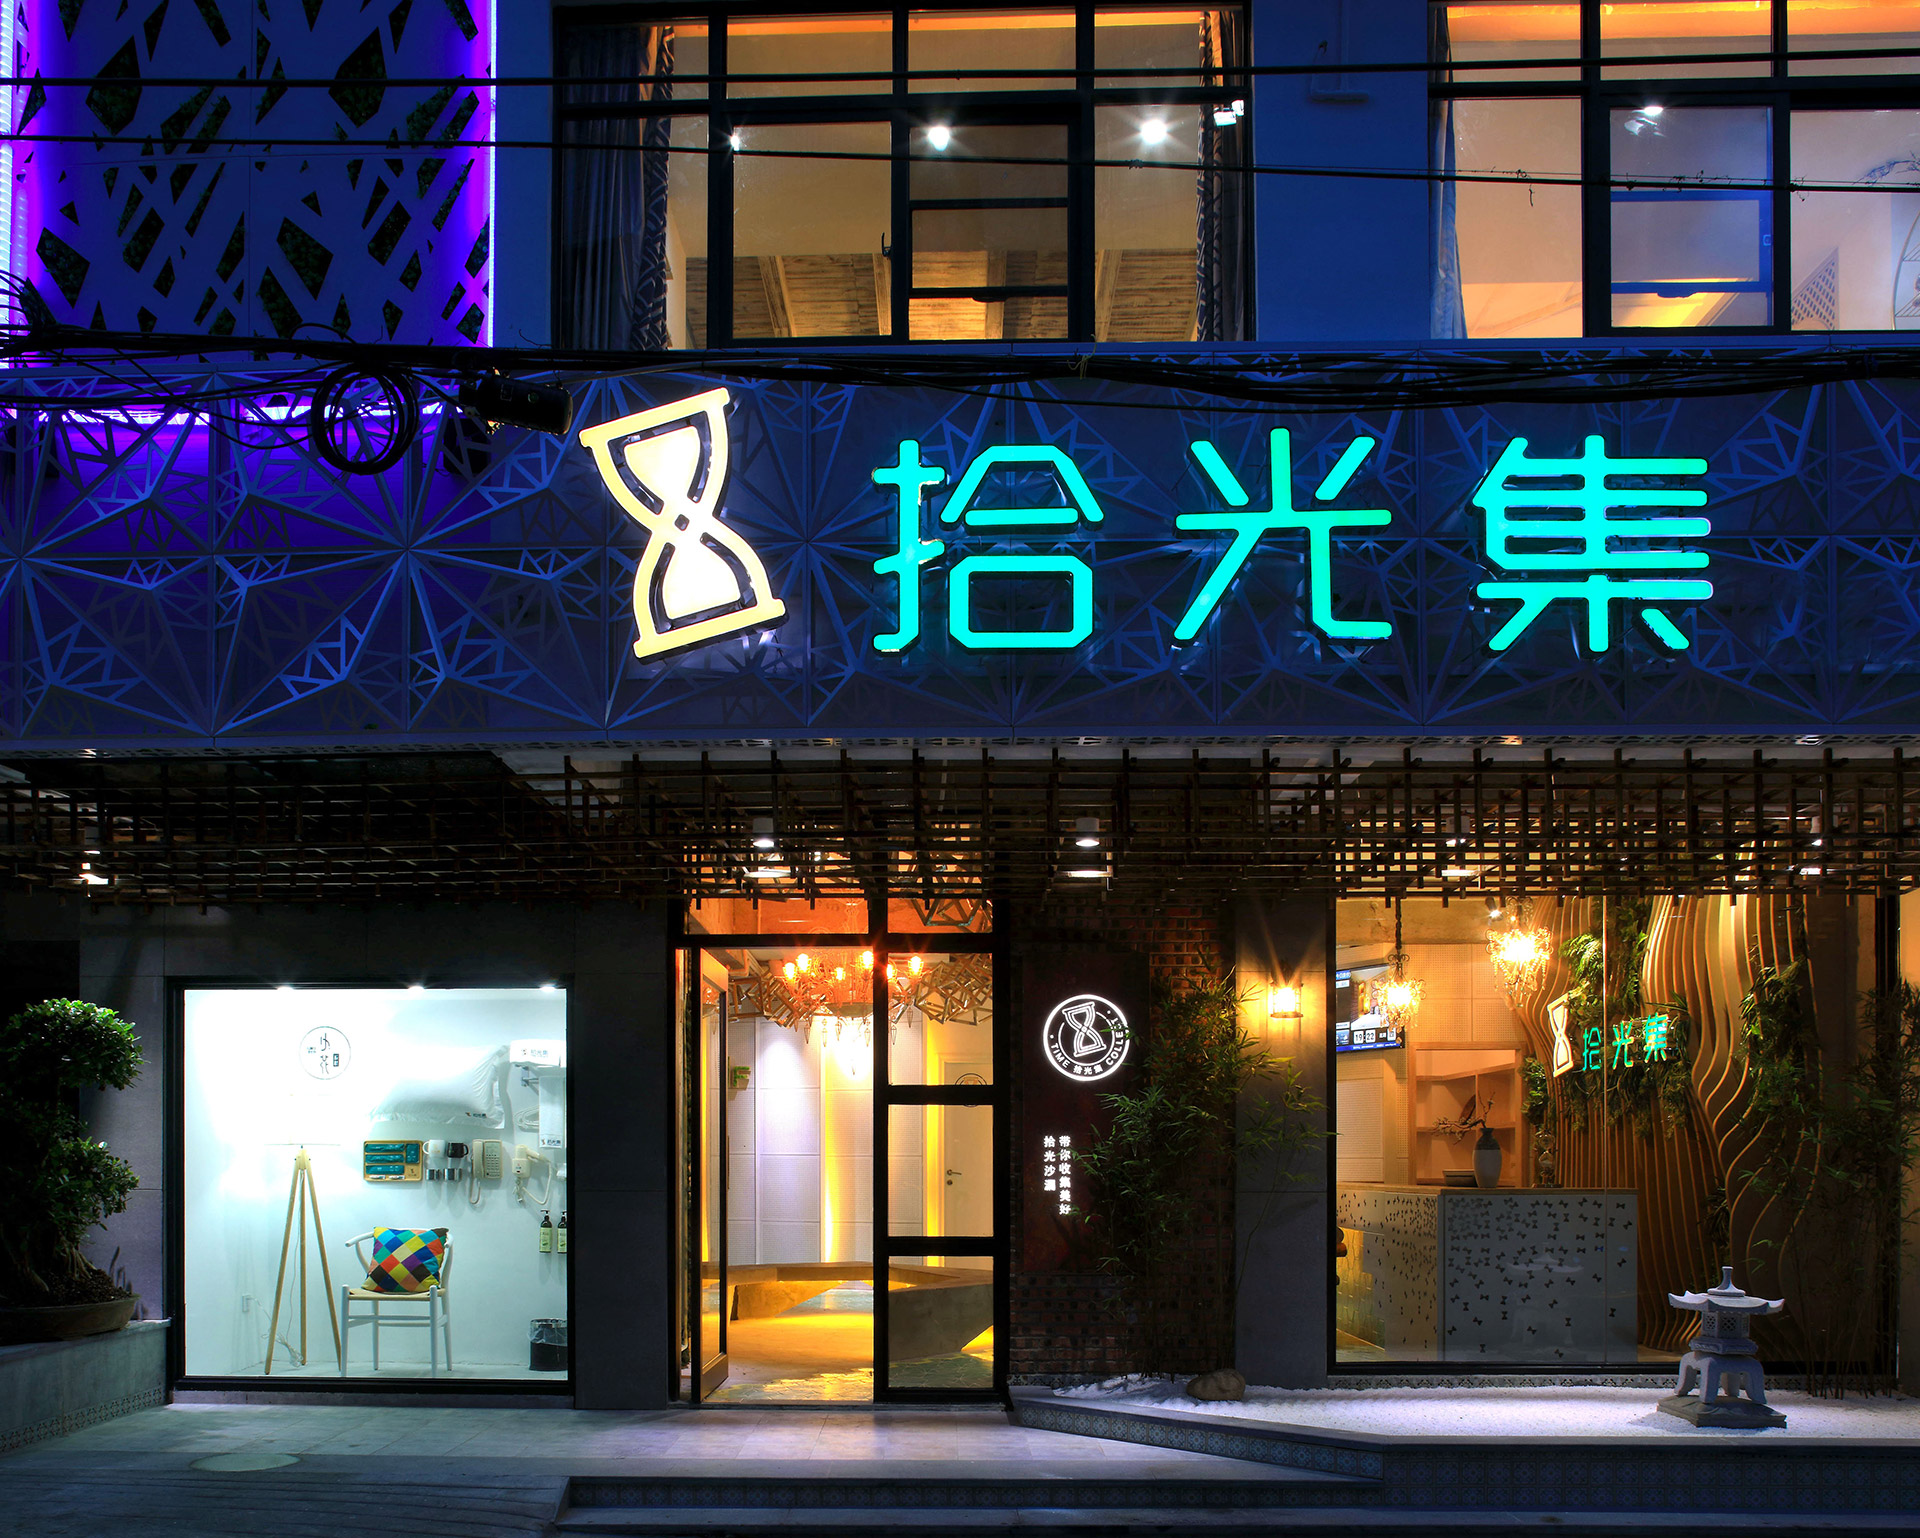 Sanya Shiguangji Art Theme Hotel